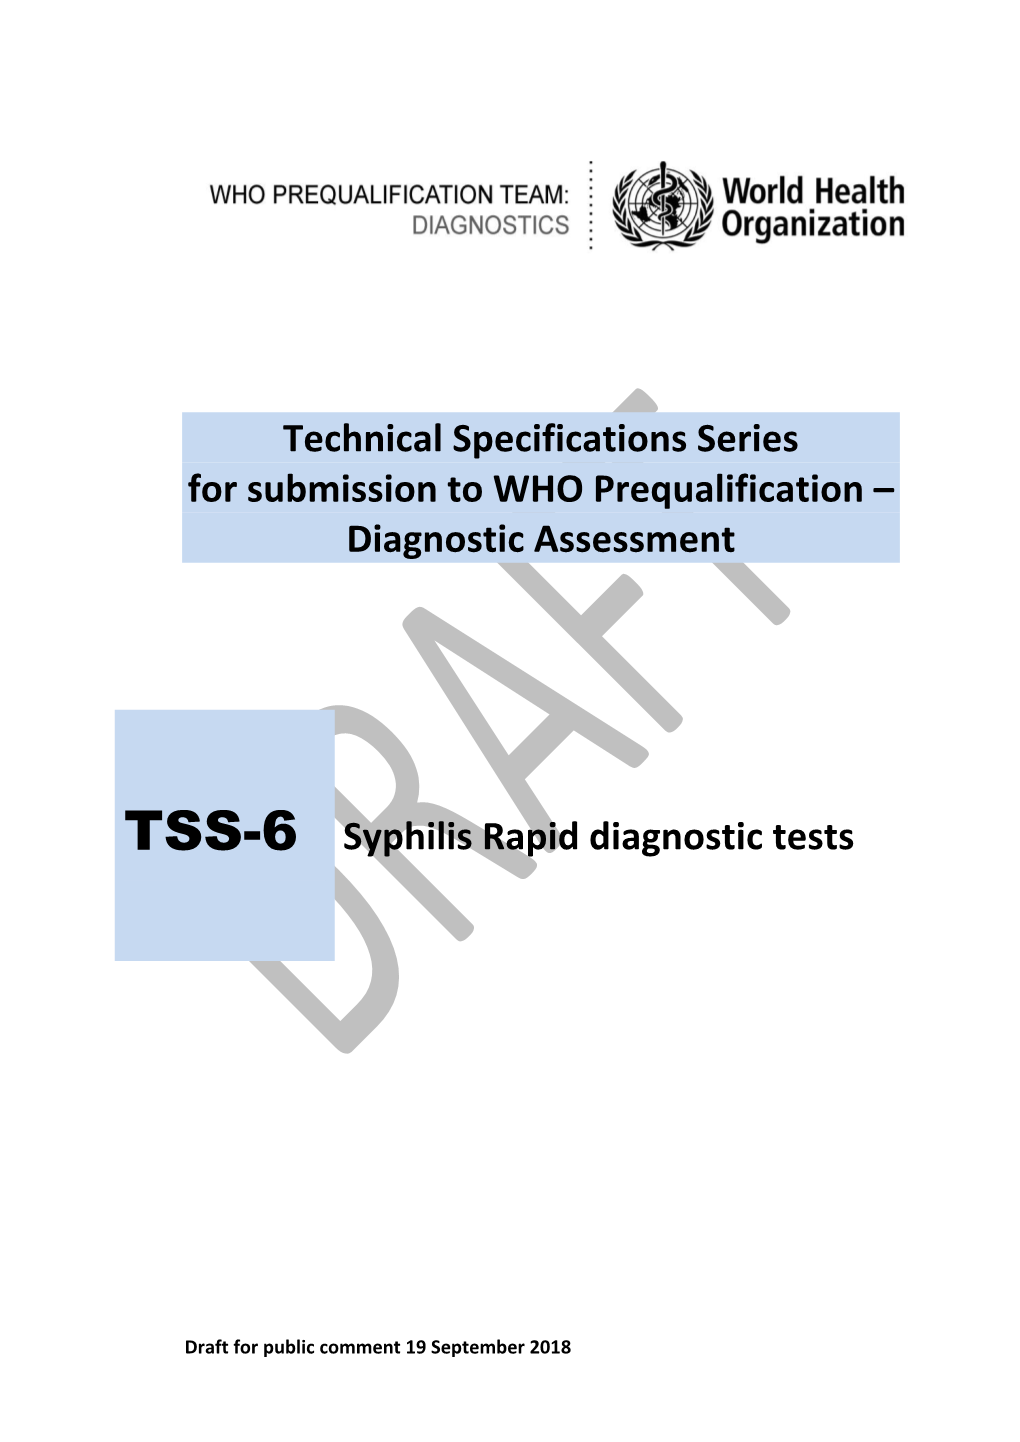 TSS-6 Syphilis Rapid Diagnostic Tests